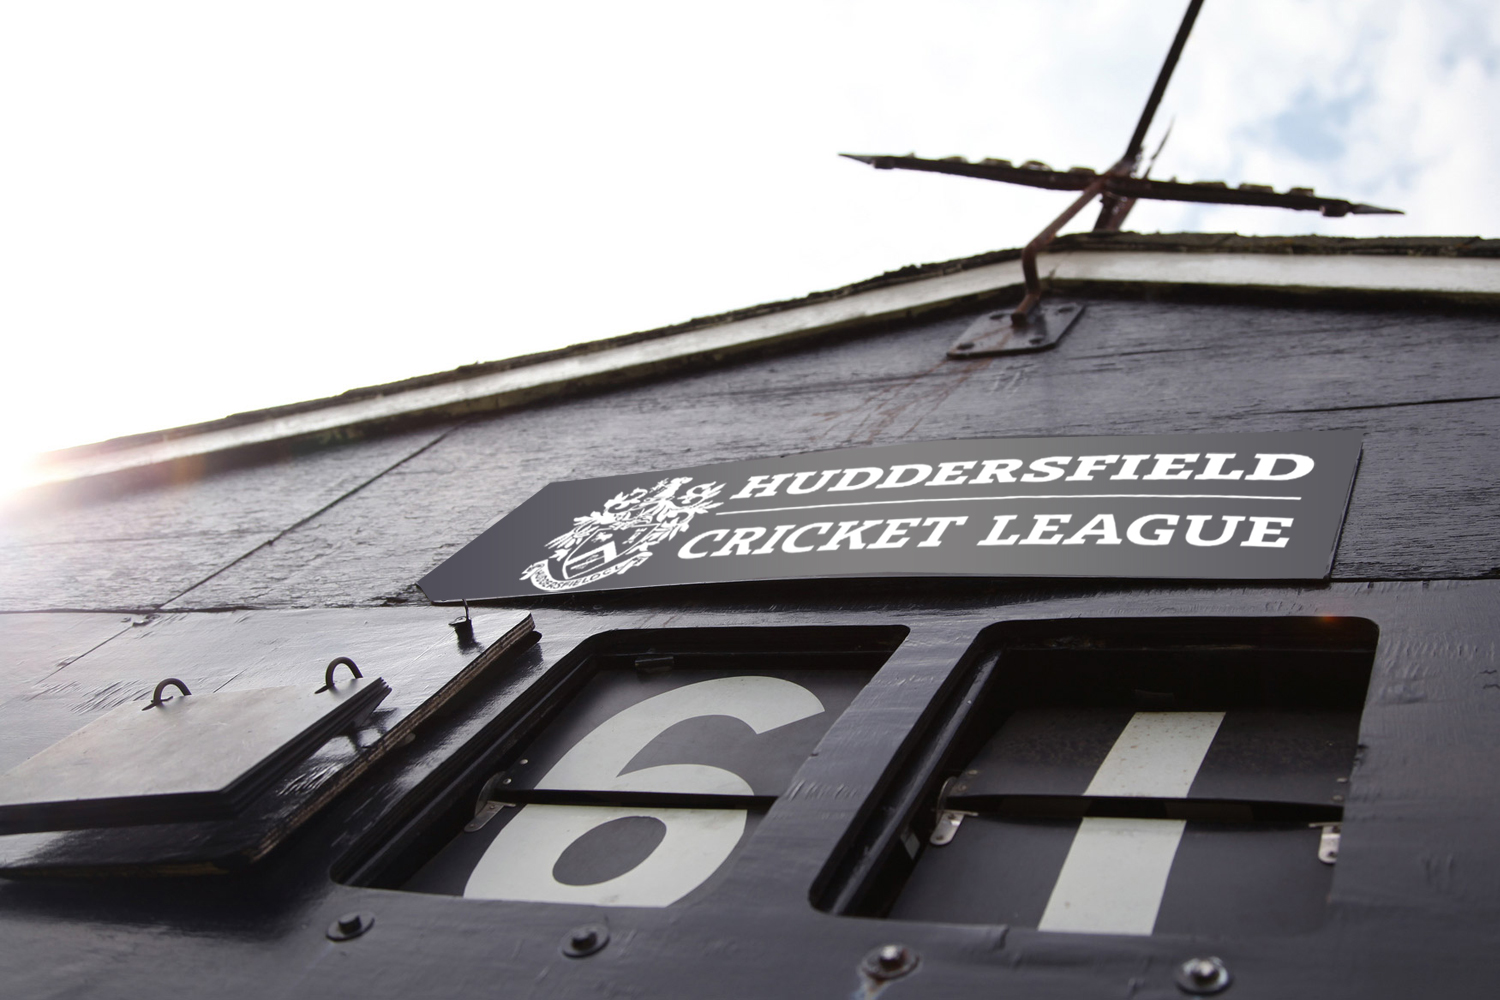 Huddersfield Cricket League Has Rebranded